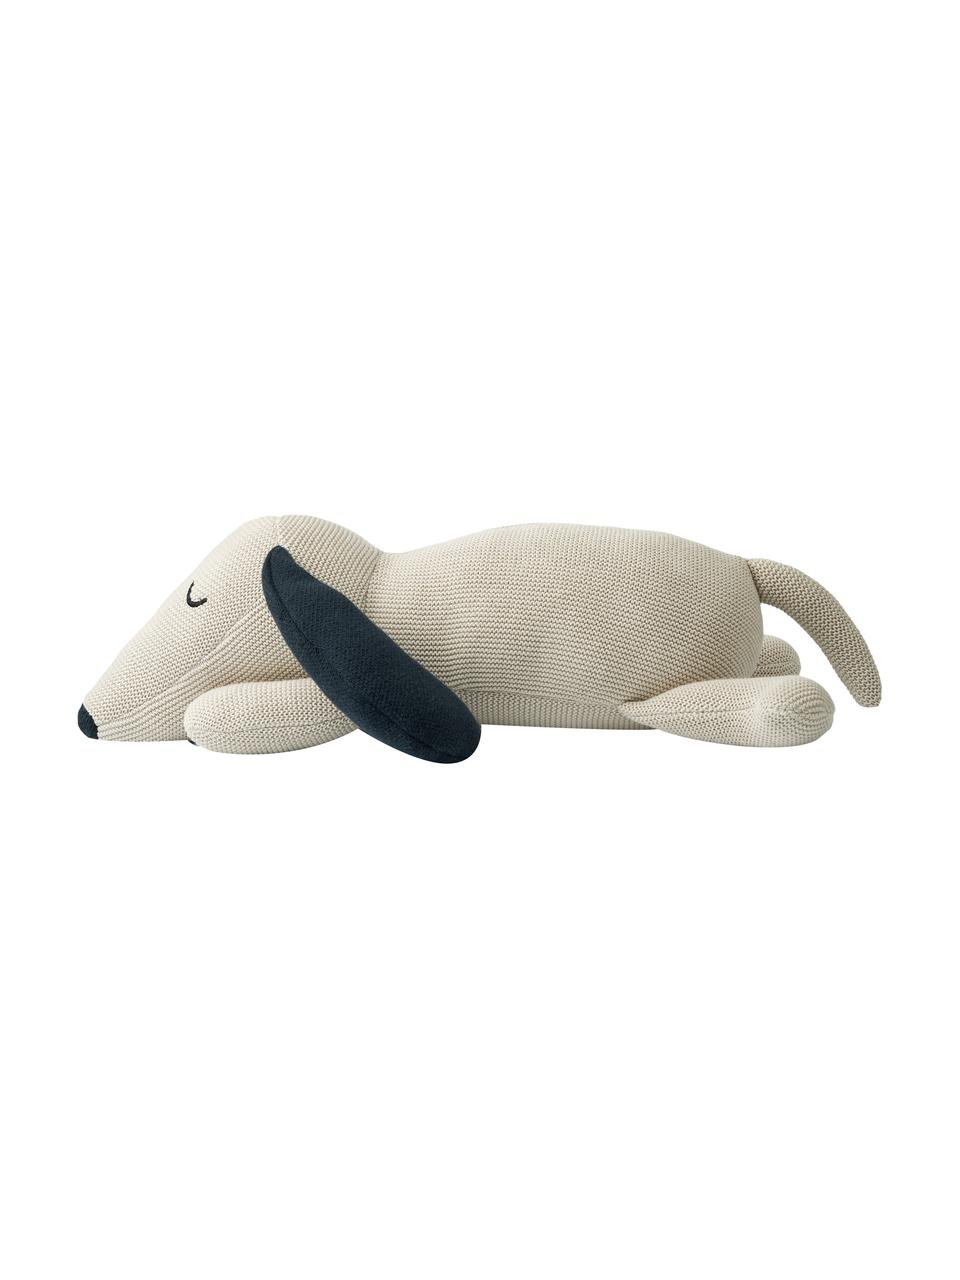 Knuffeldier Daniel the Dog, Bekleding: 100% katoen, Gebroken wit, donkerblauw, Ø 40 x H 14 cm